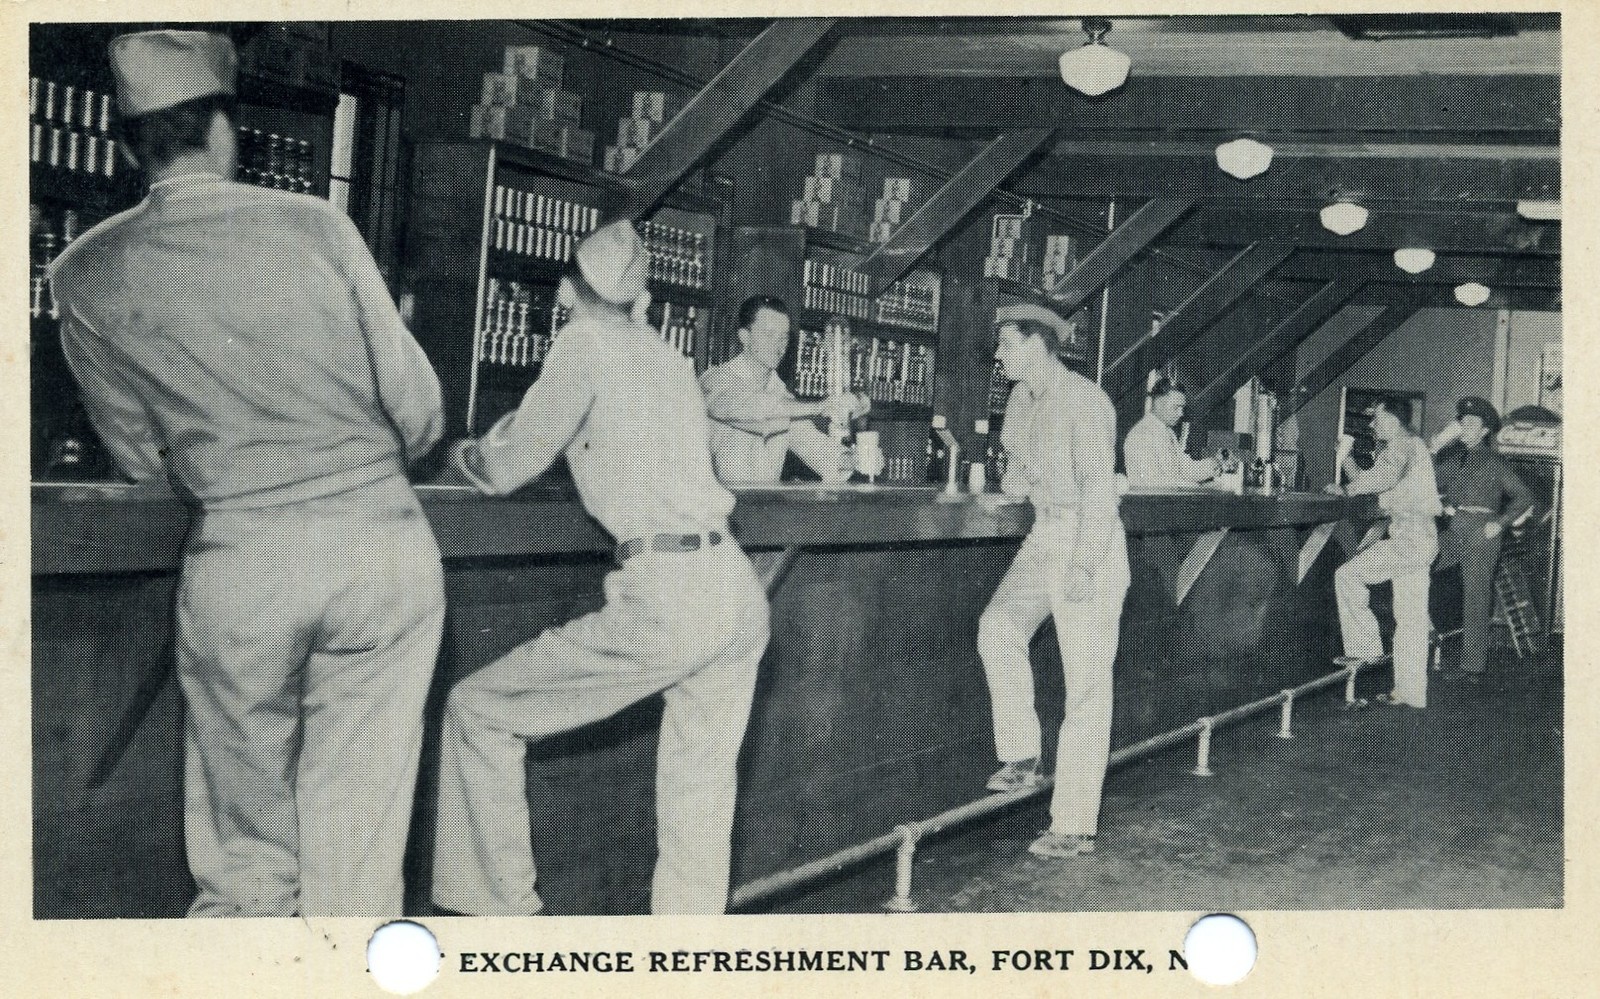 Fort Dix - Exchange refreshment bar - 1940s